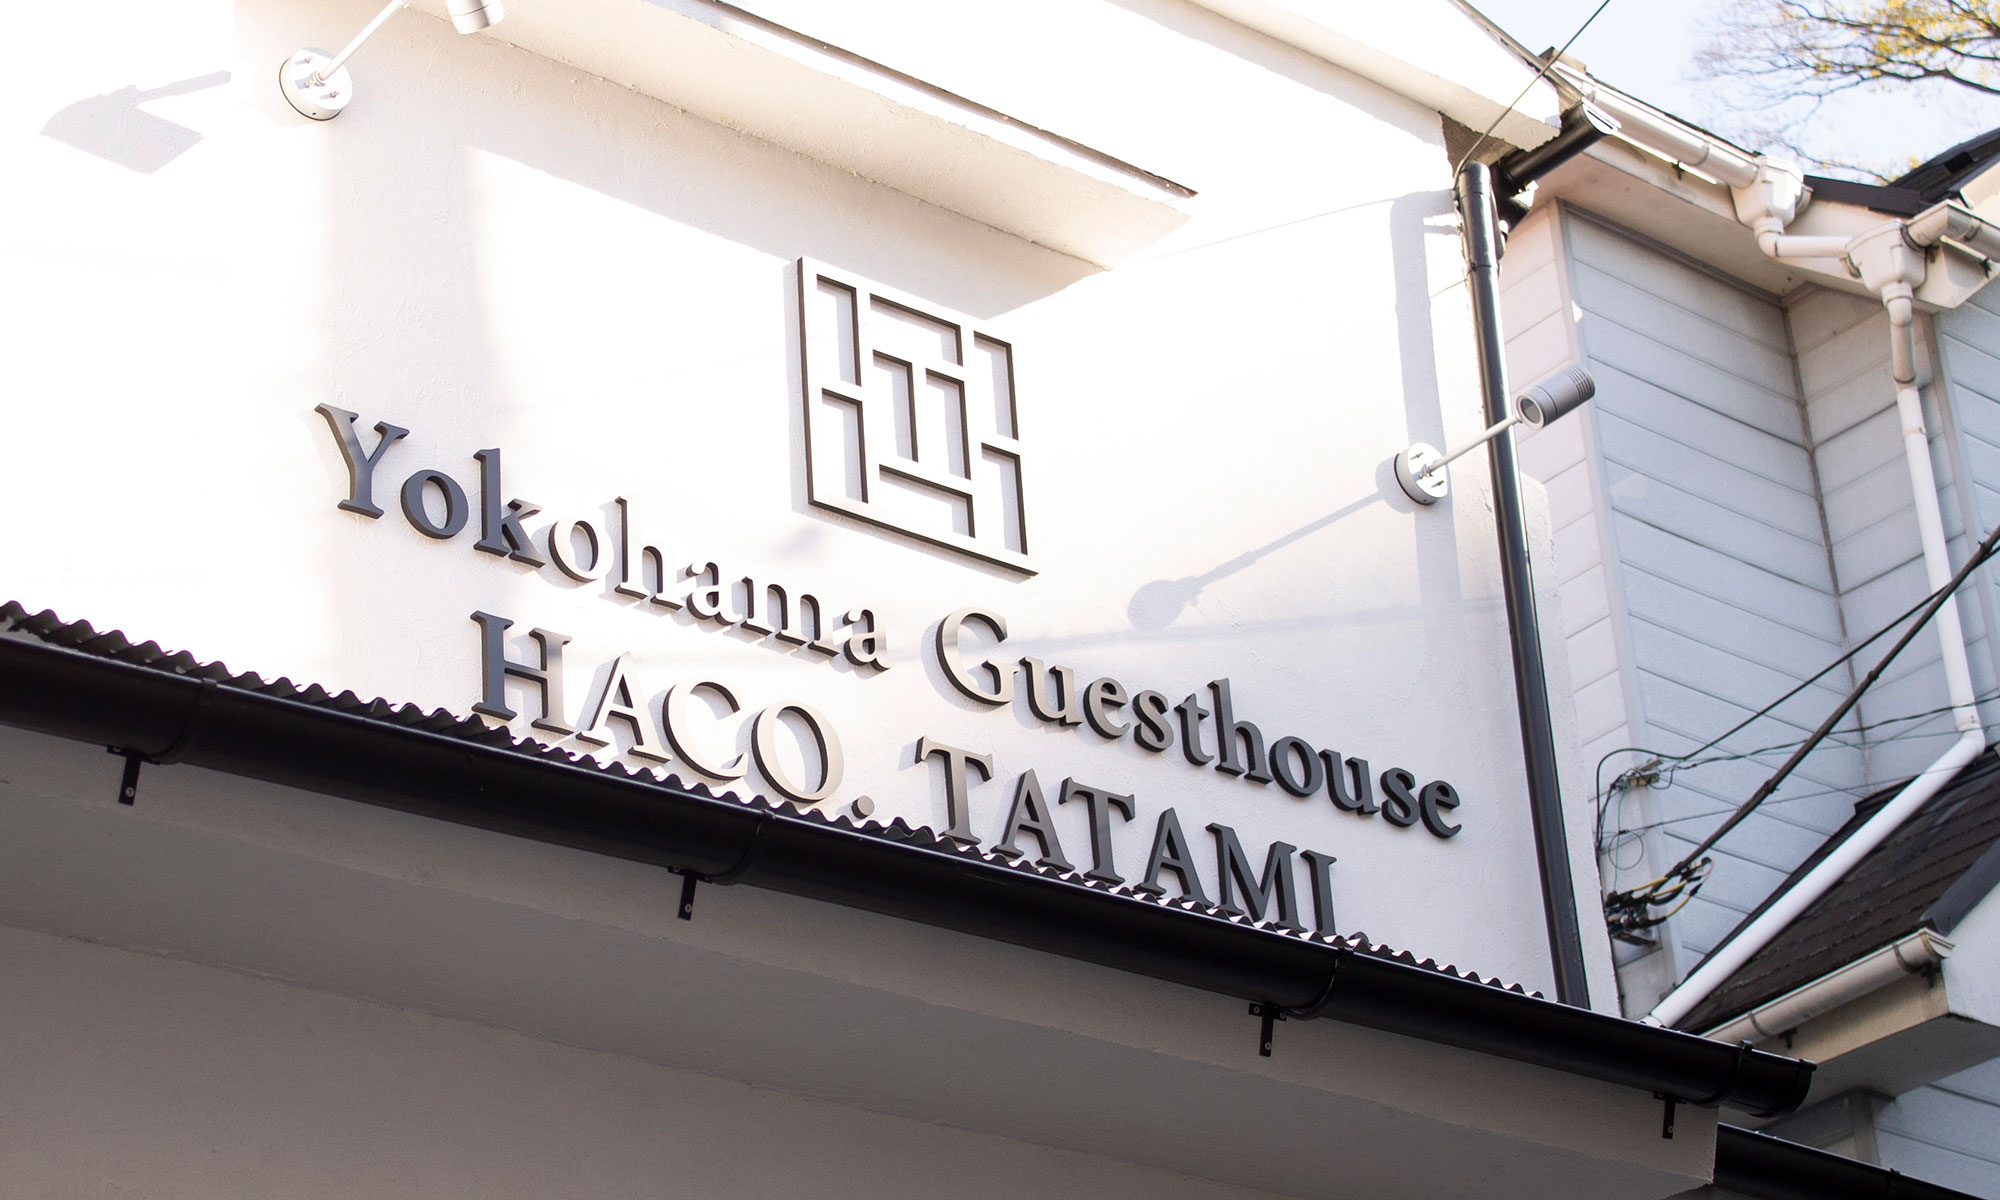 Yokohama Guesthouse HACO. TATAMI.